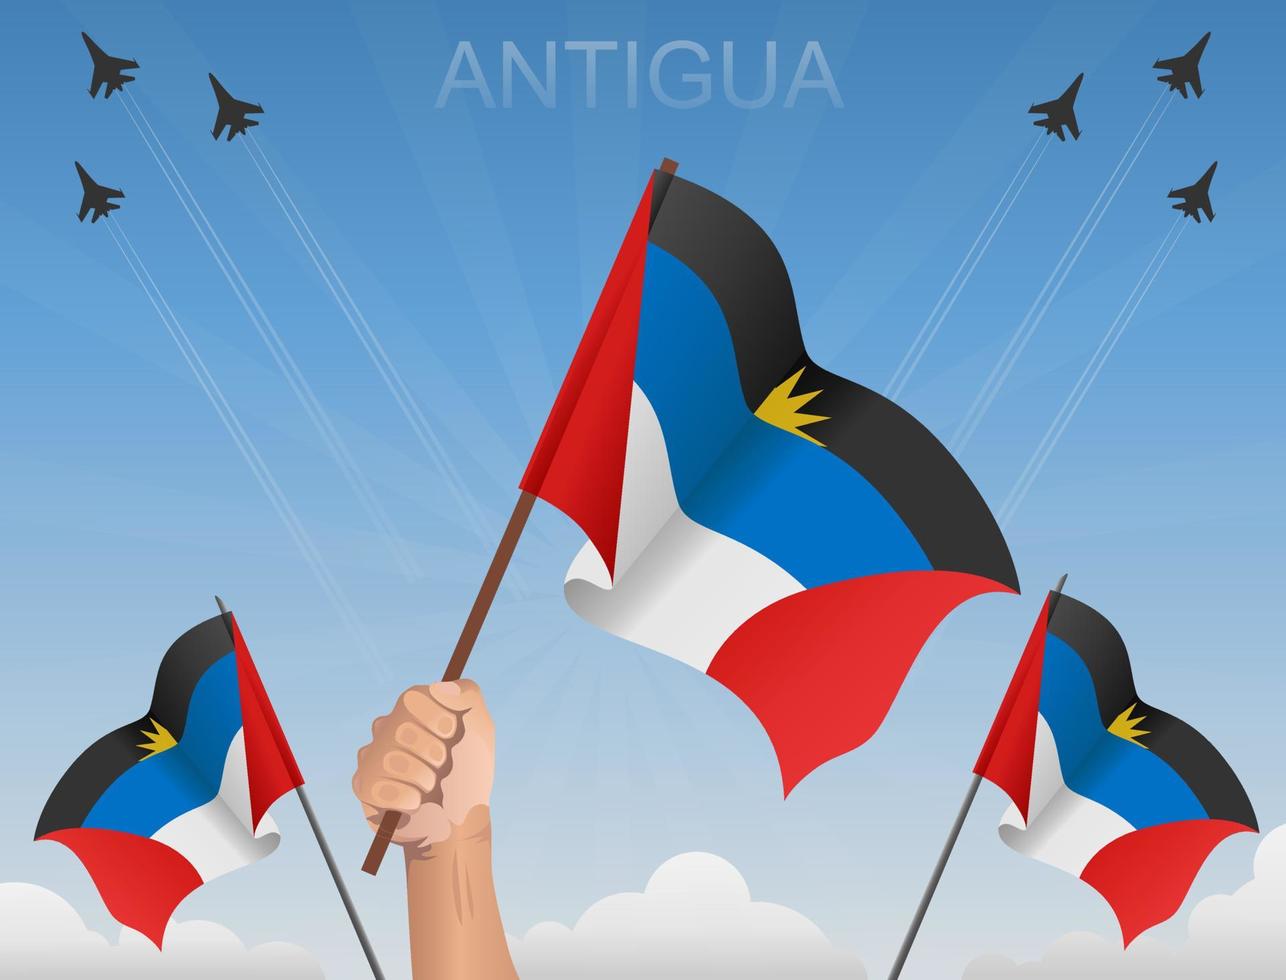 Antigua flags Flying under the blue sky vector